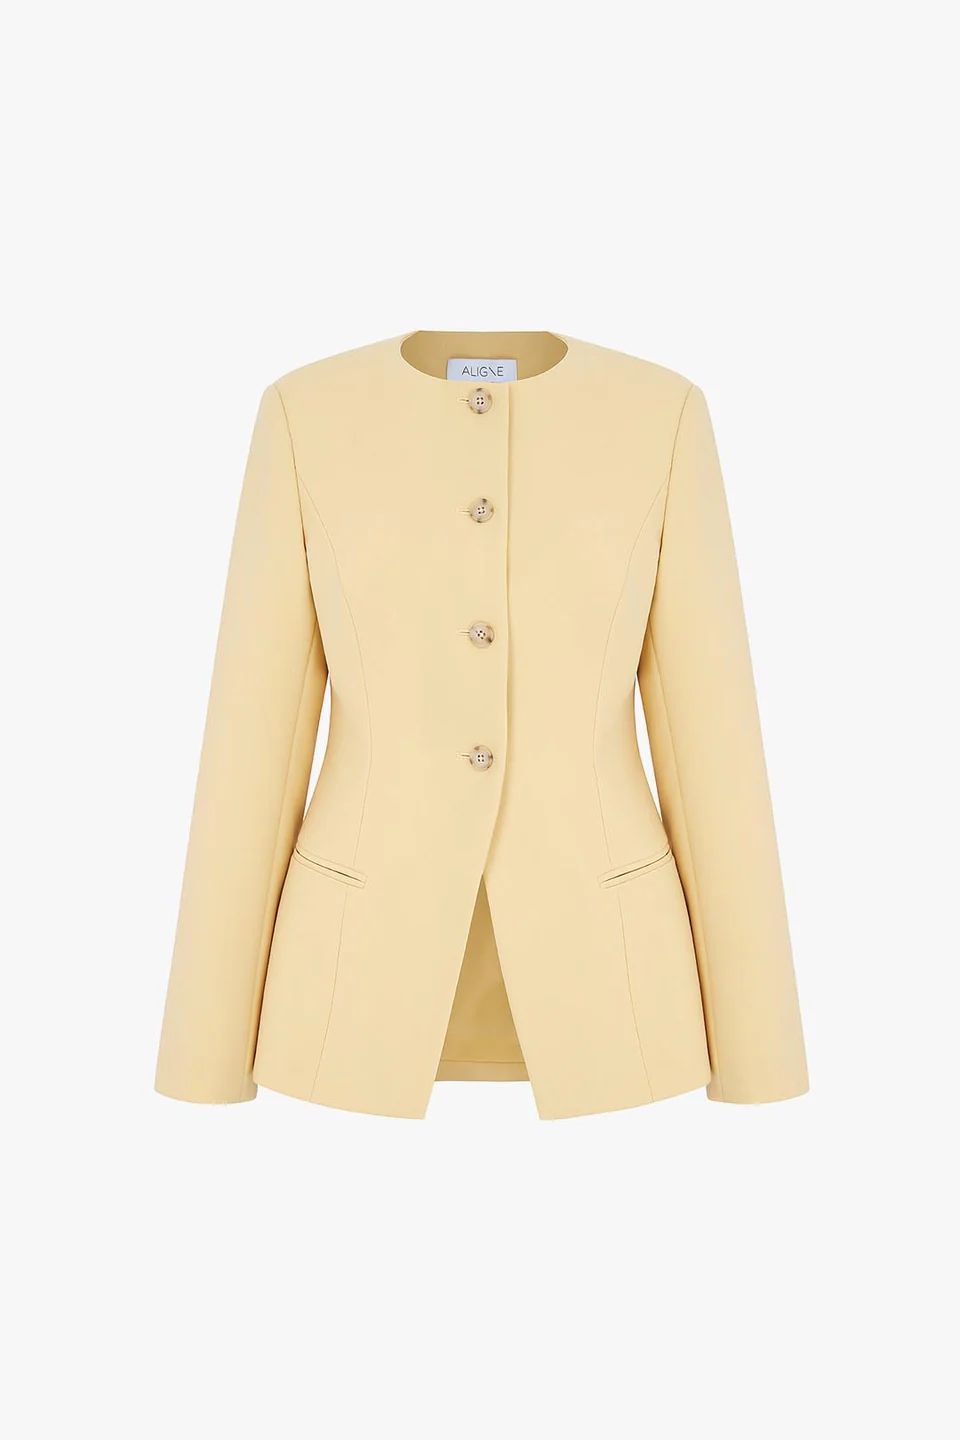 Daphne | Long Waisted Blazer in Soft Yellow | ALIGNE | Aligne UK